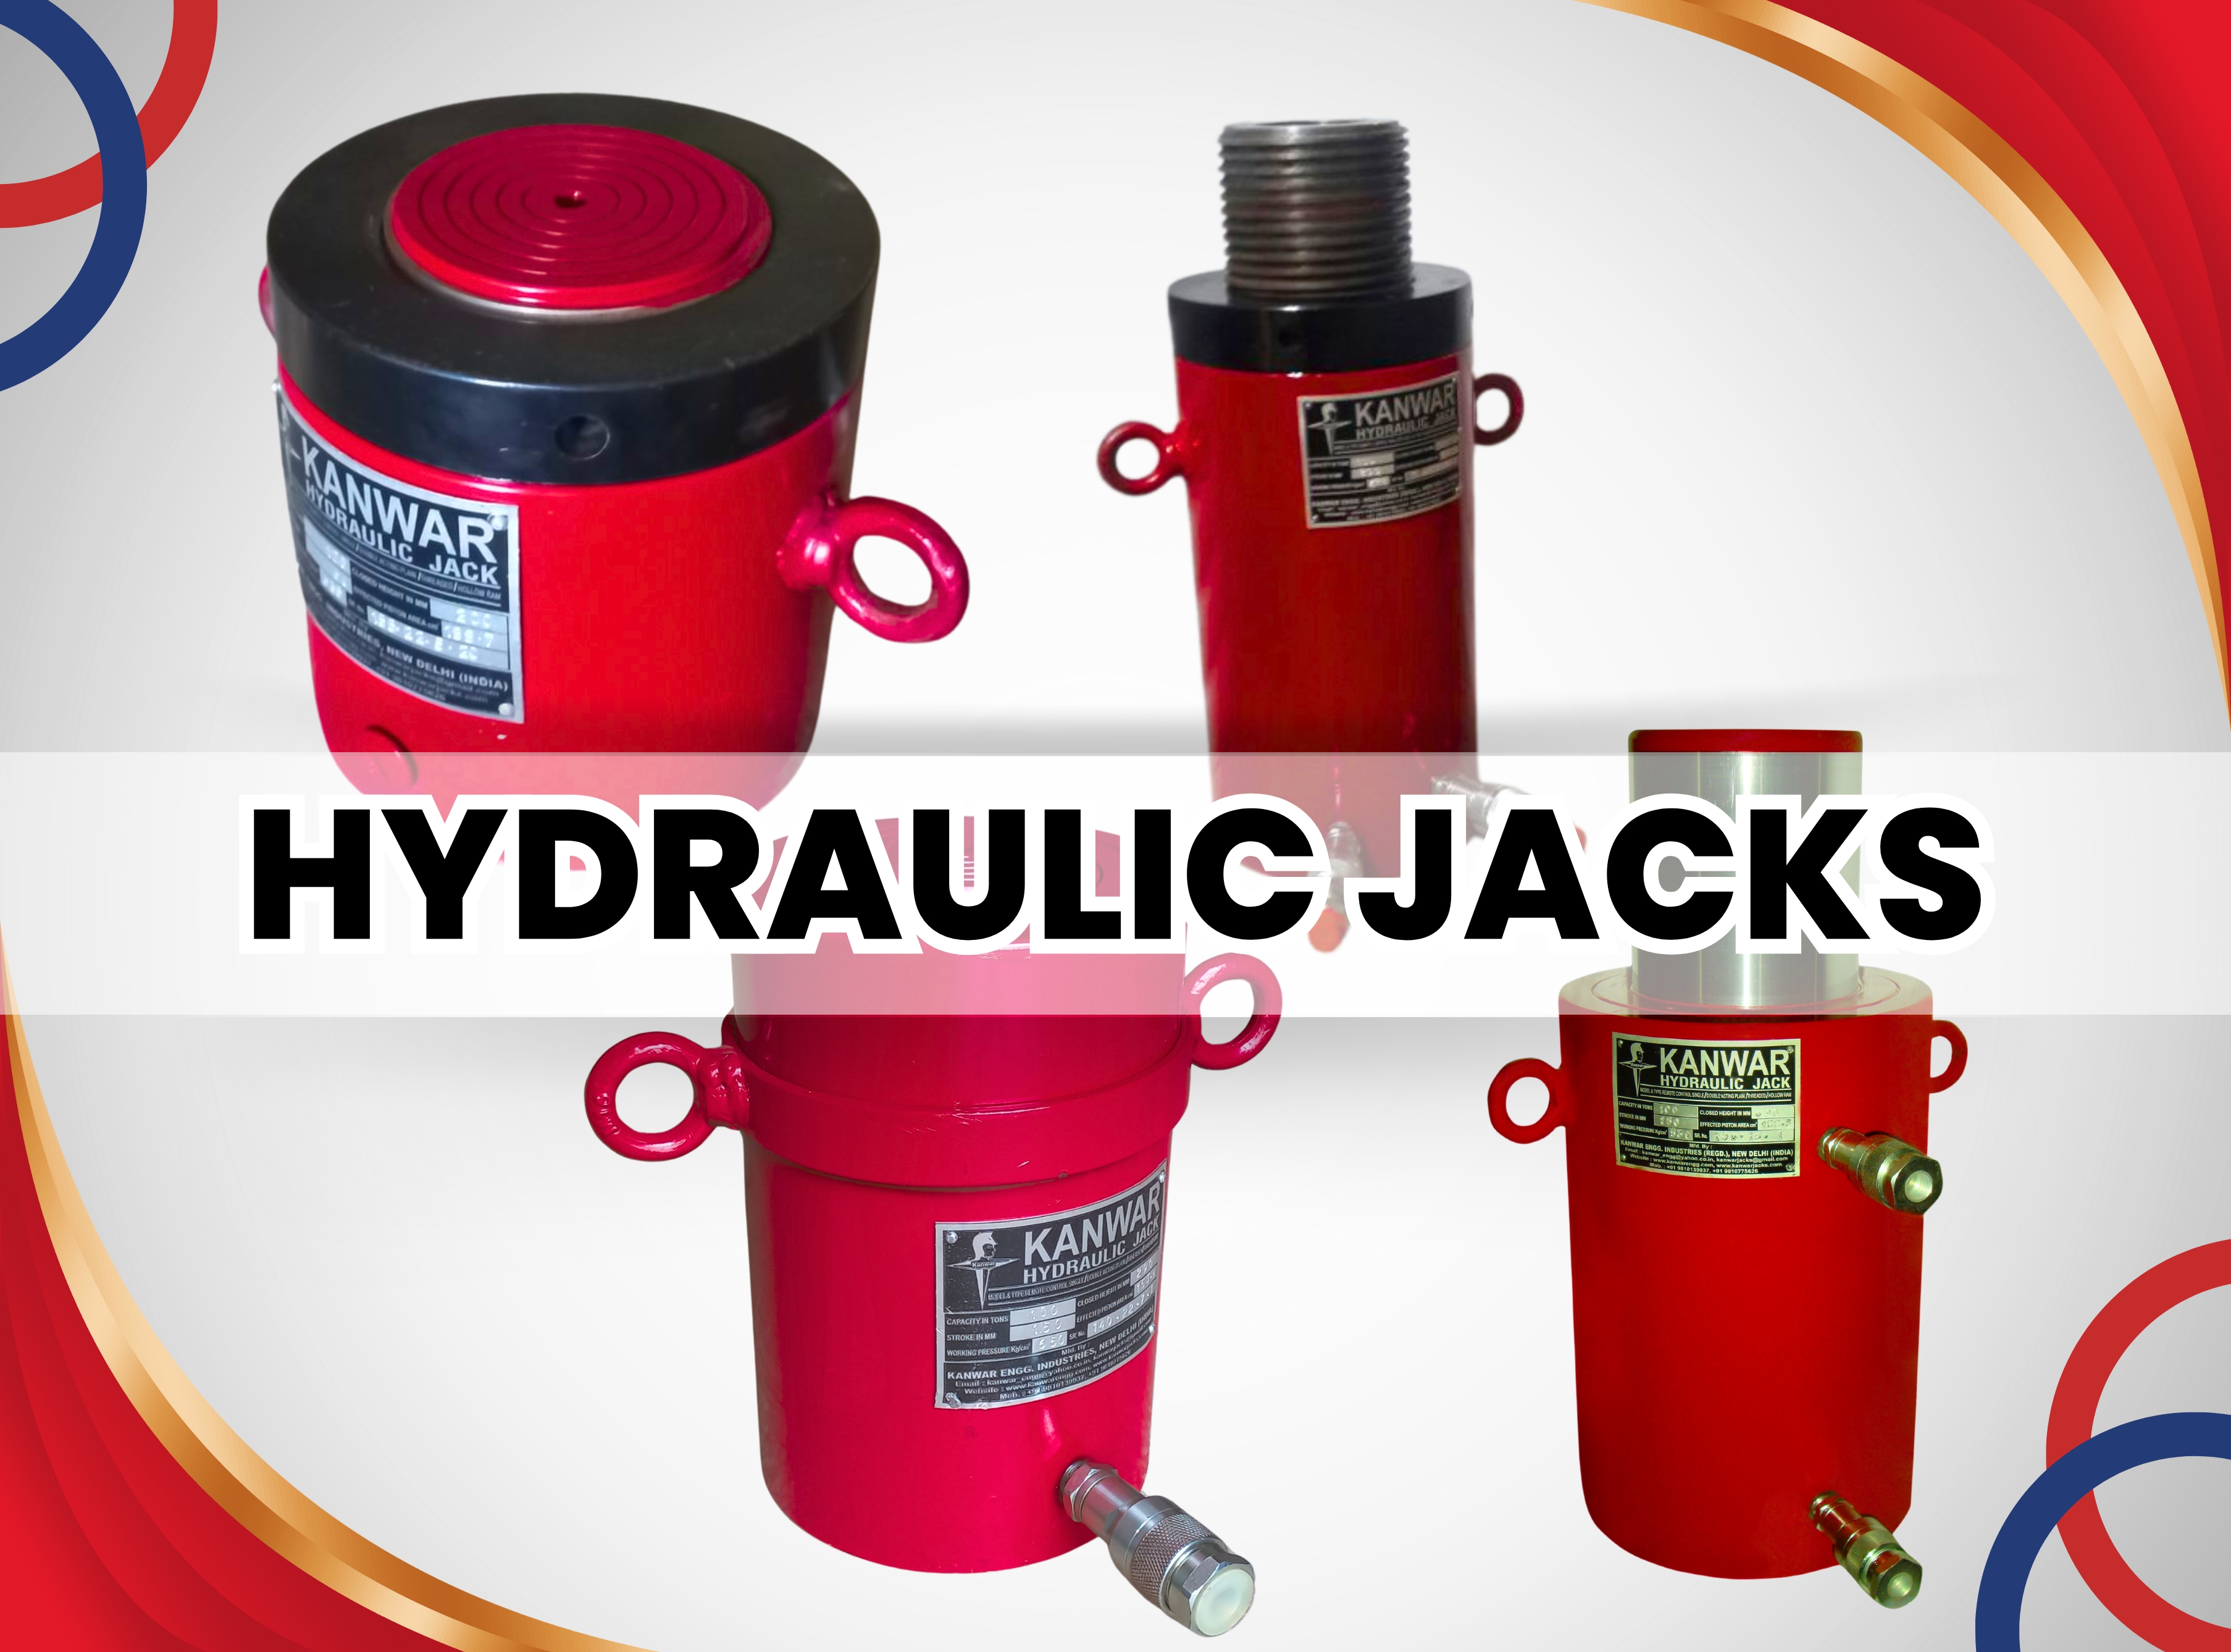 Hydraulic Jacks